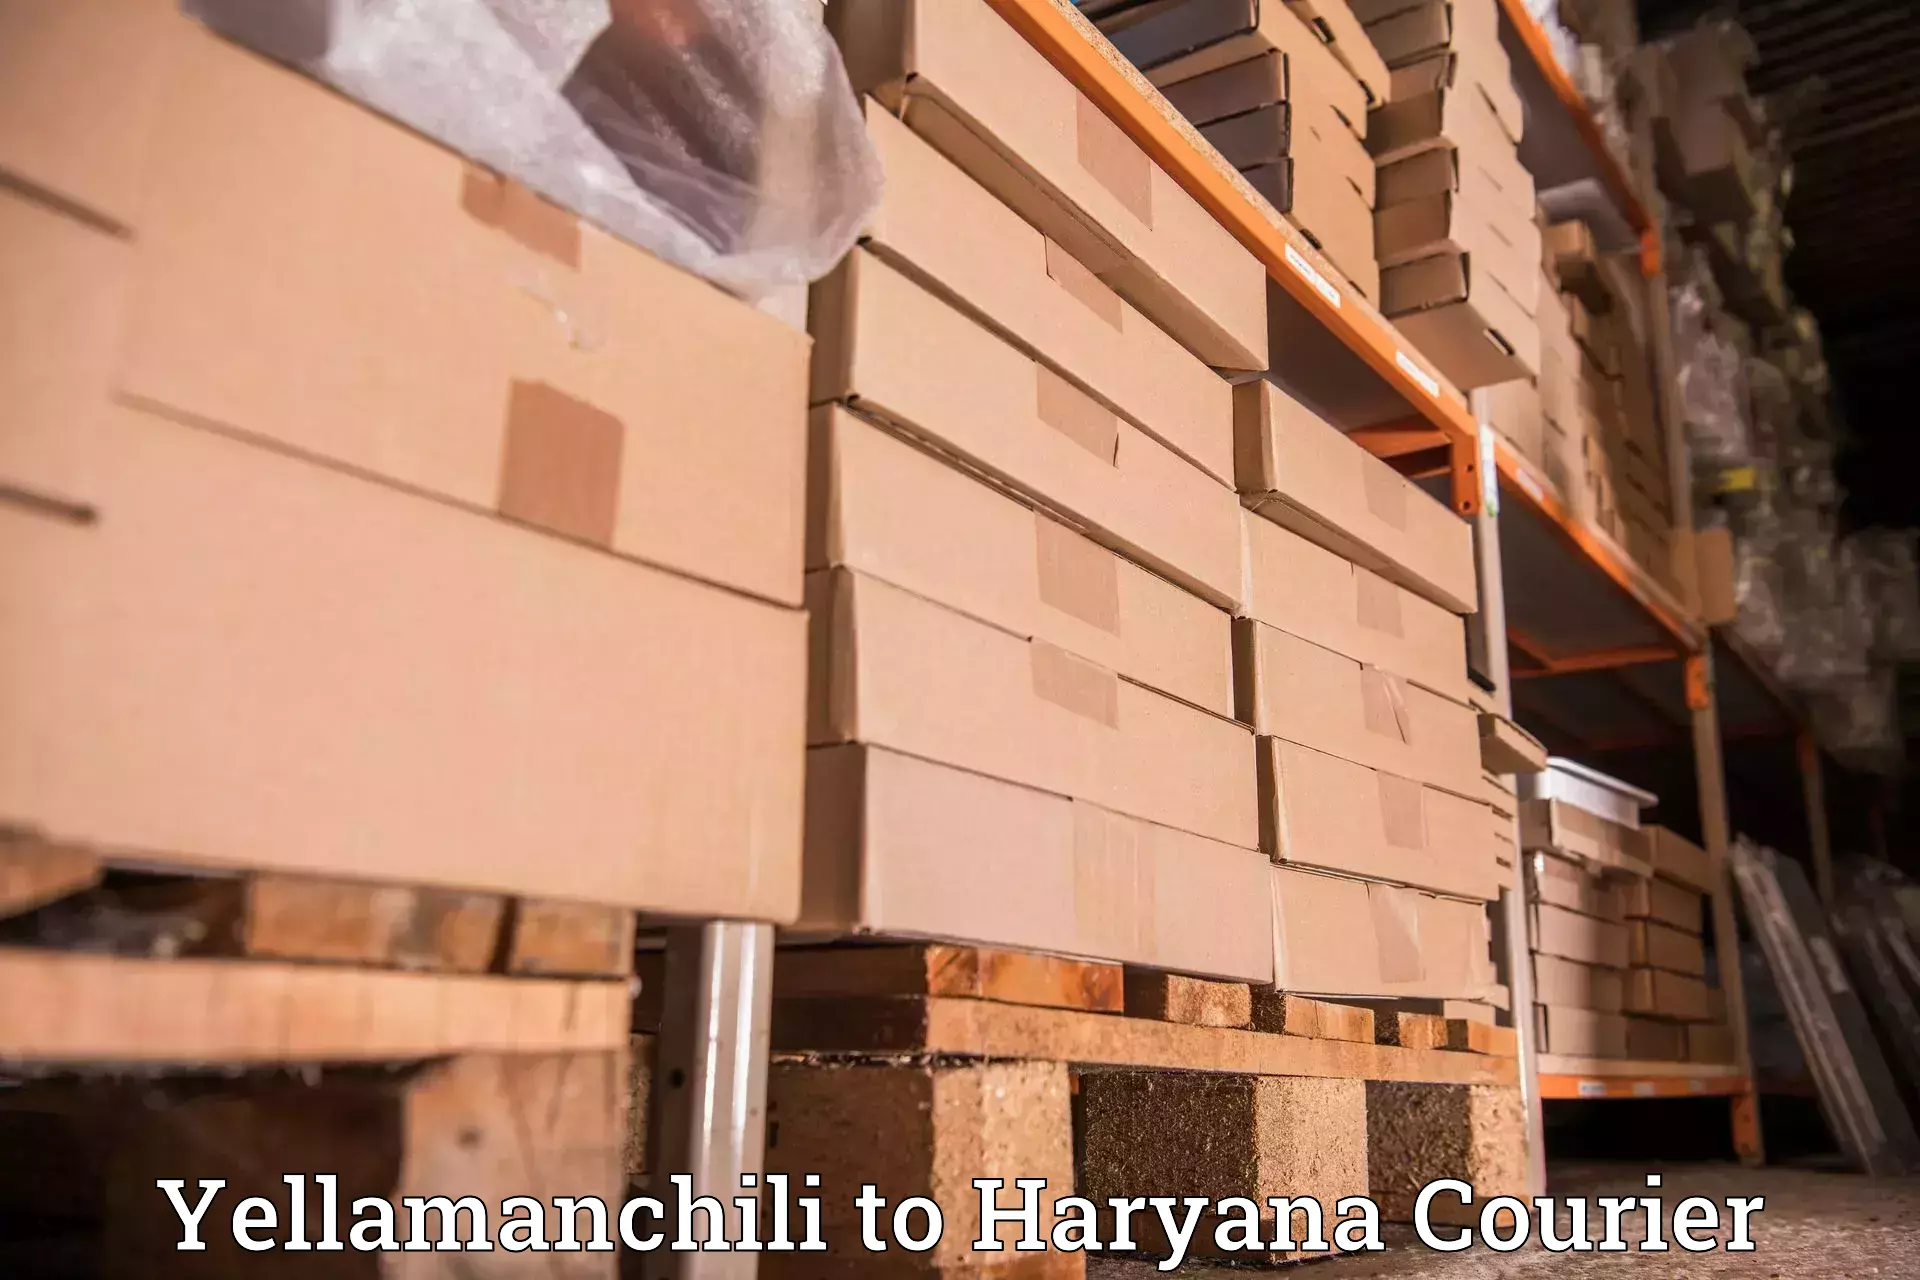 High-speed logistics services Yellamanchili to Sonipat